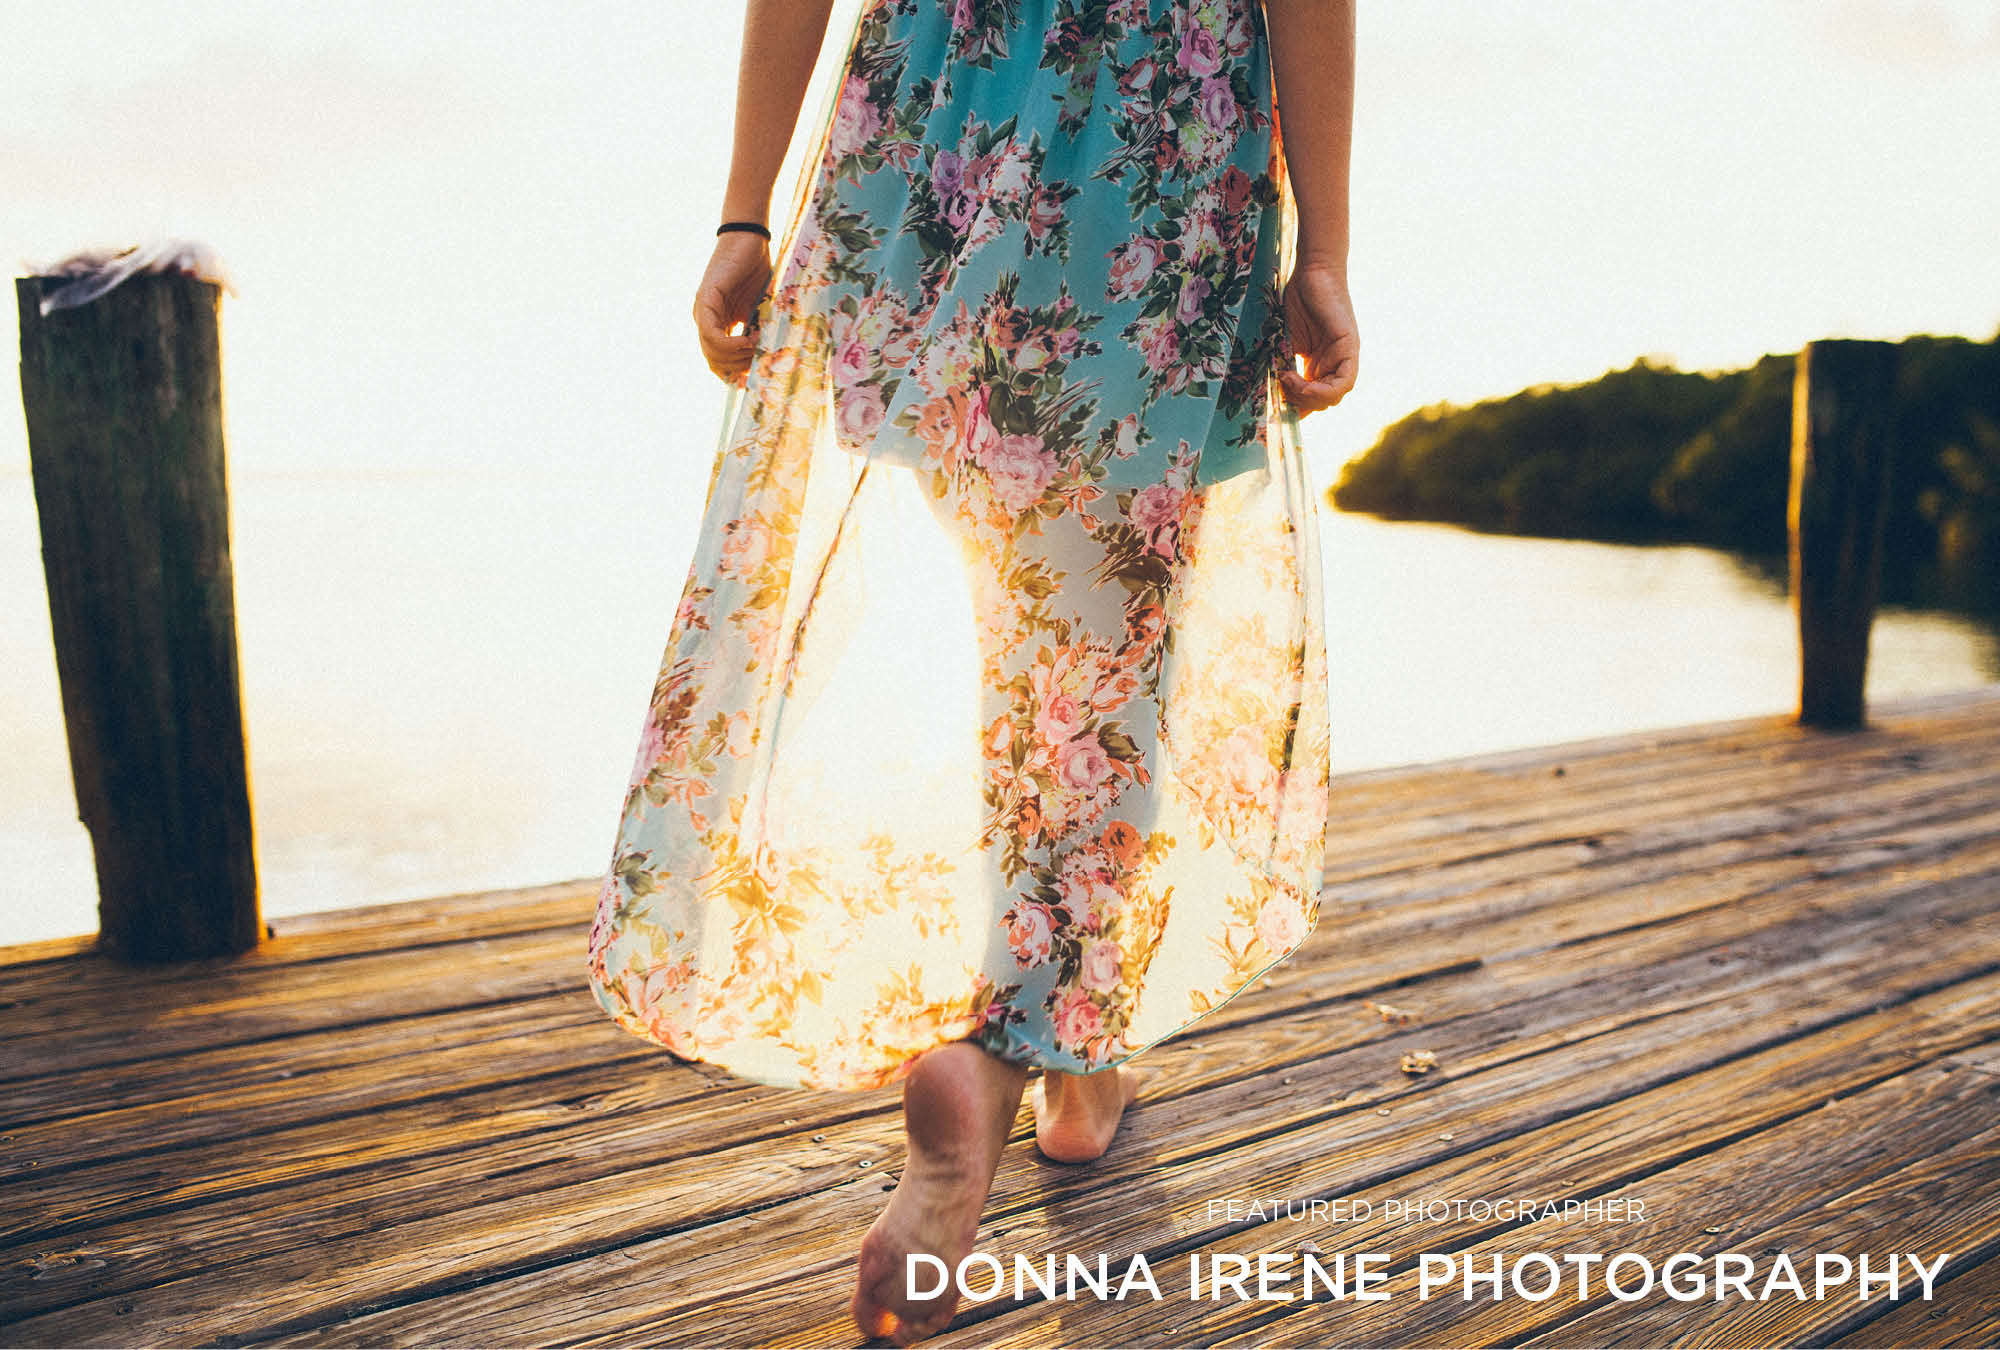 Donna Irene Photography